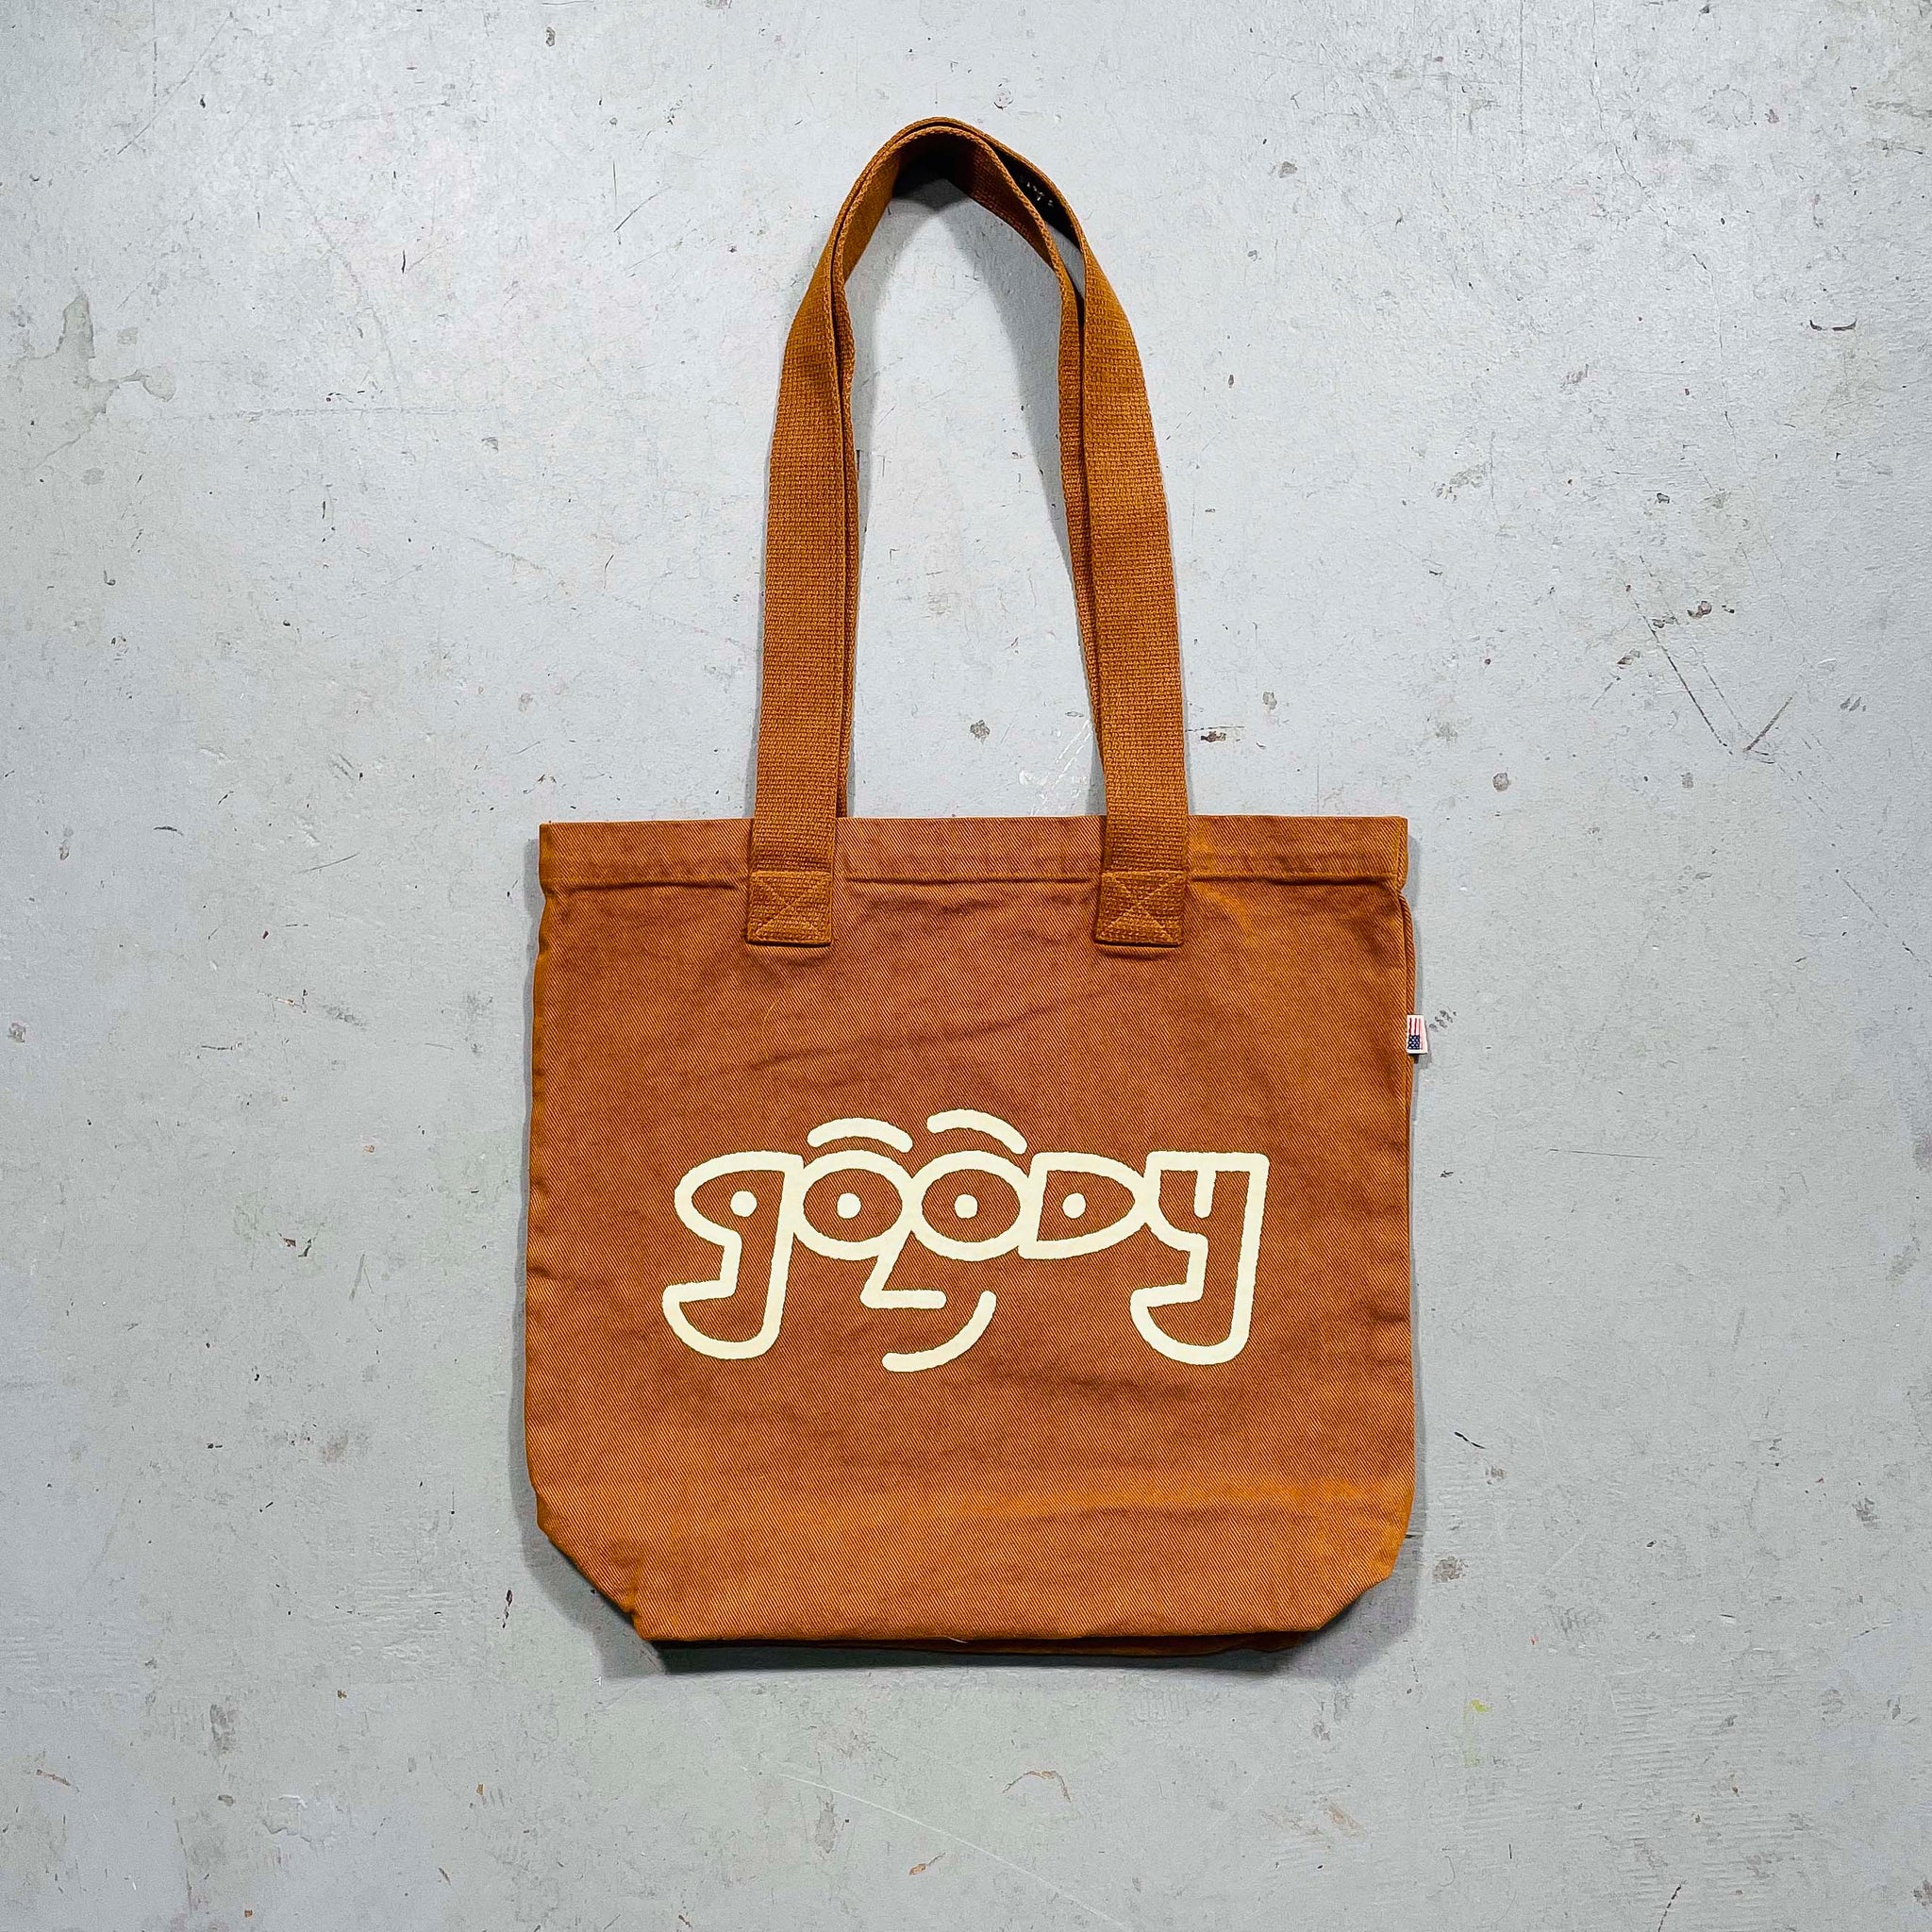 The Goody Bag